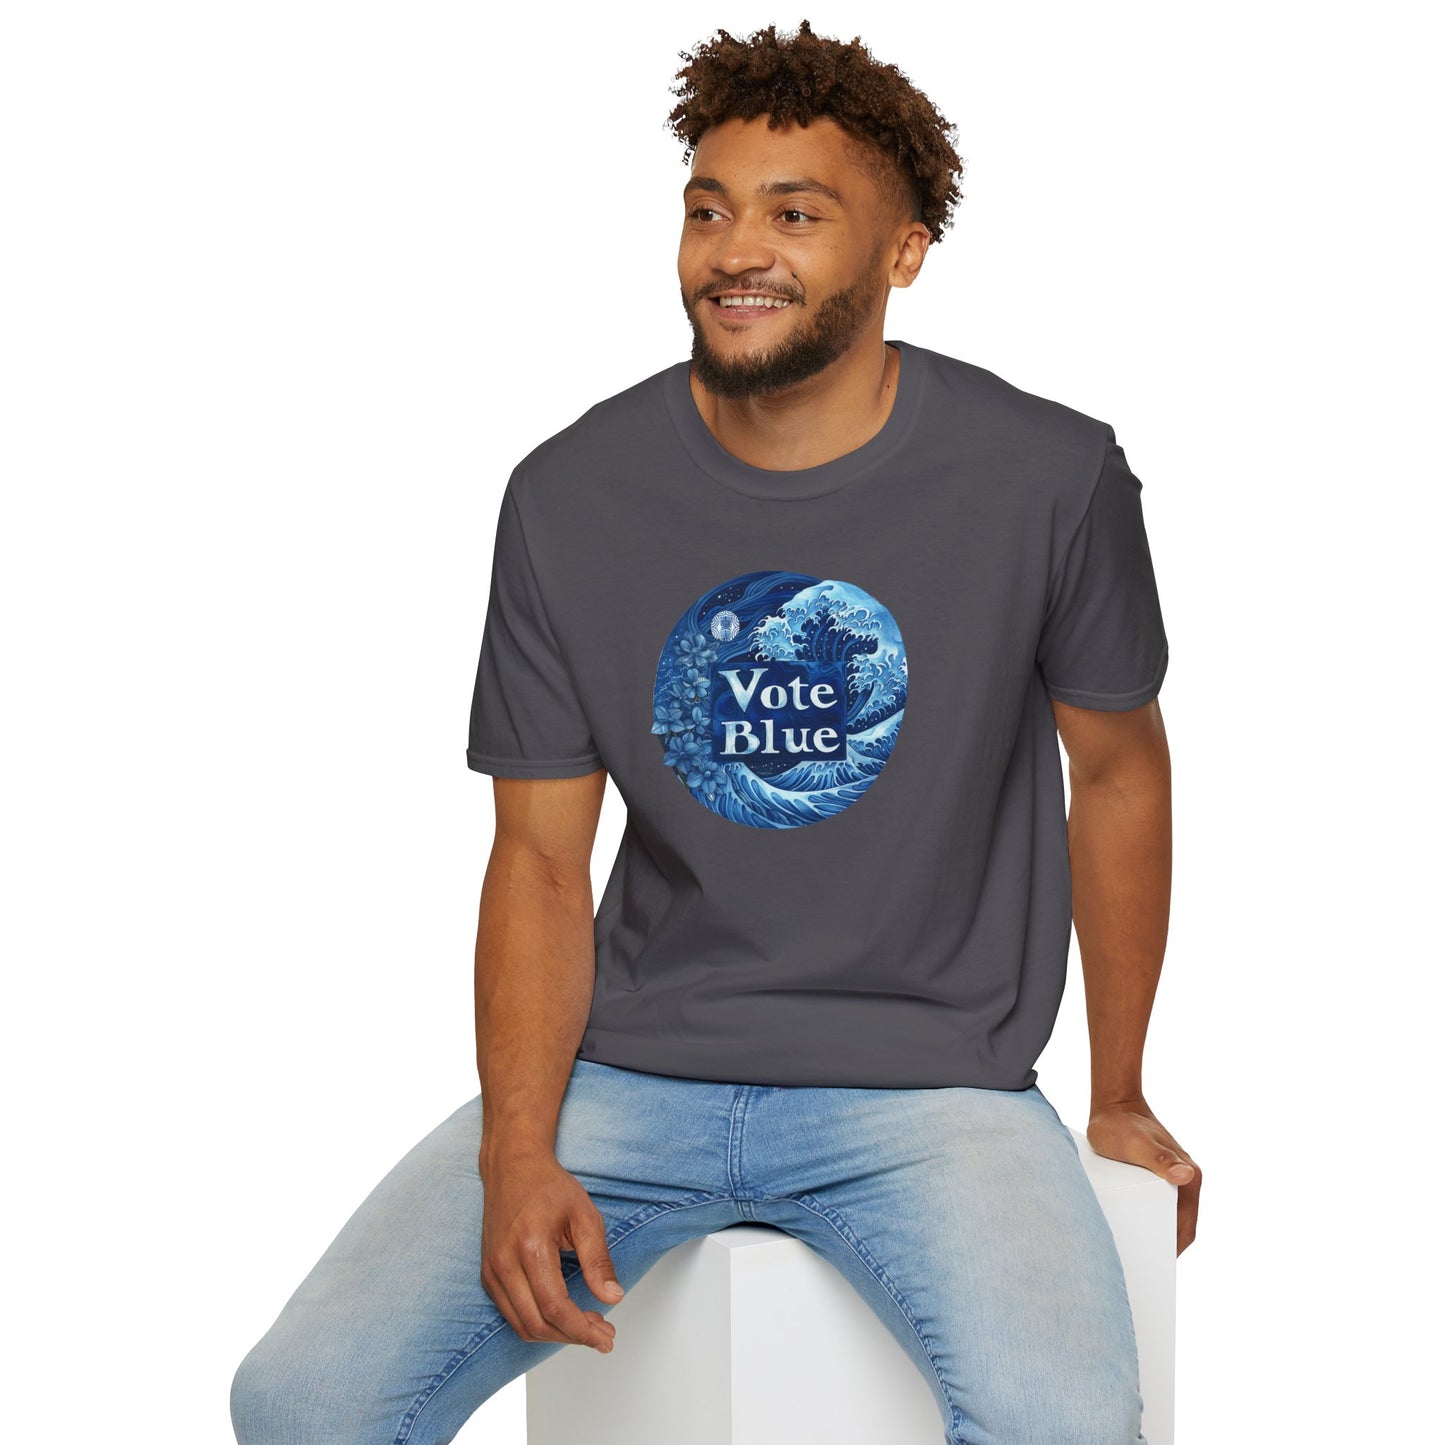 Vote Blue Shirt Vote Biden tshirt Political tee Election shirt Unisex T-Shirt Liberal Activist tshirt Statement tee Japanese Art shirt